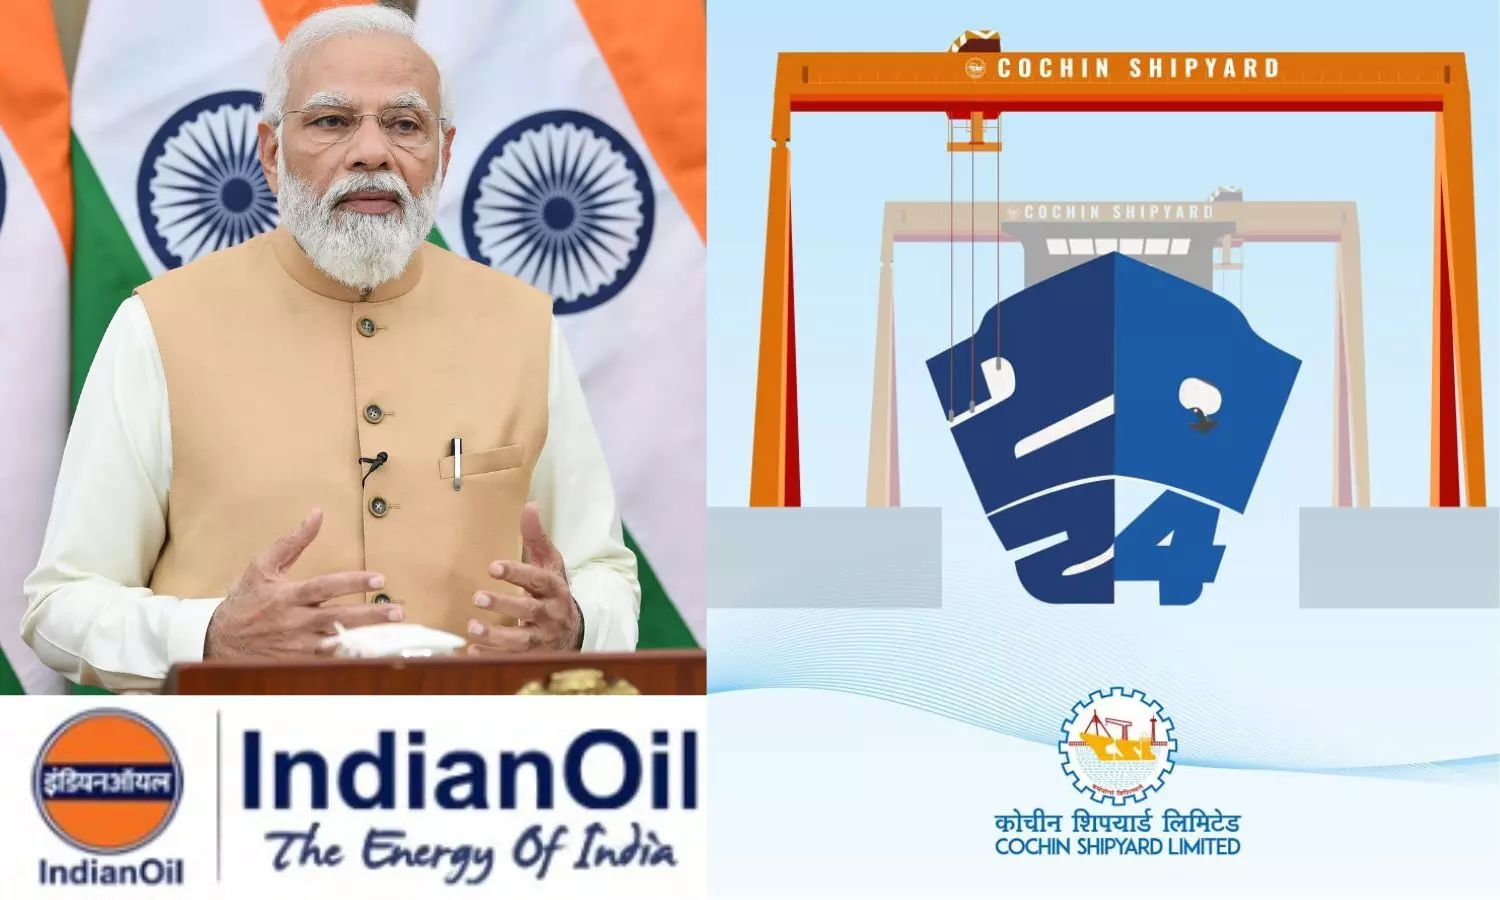 PM Modi, Indian Oil and Cochin Shipyard Logos